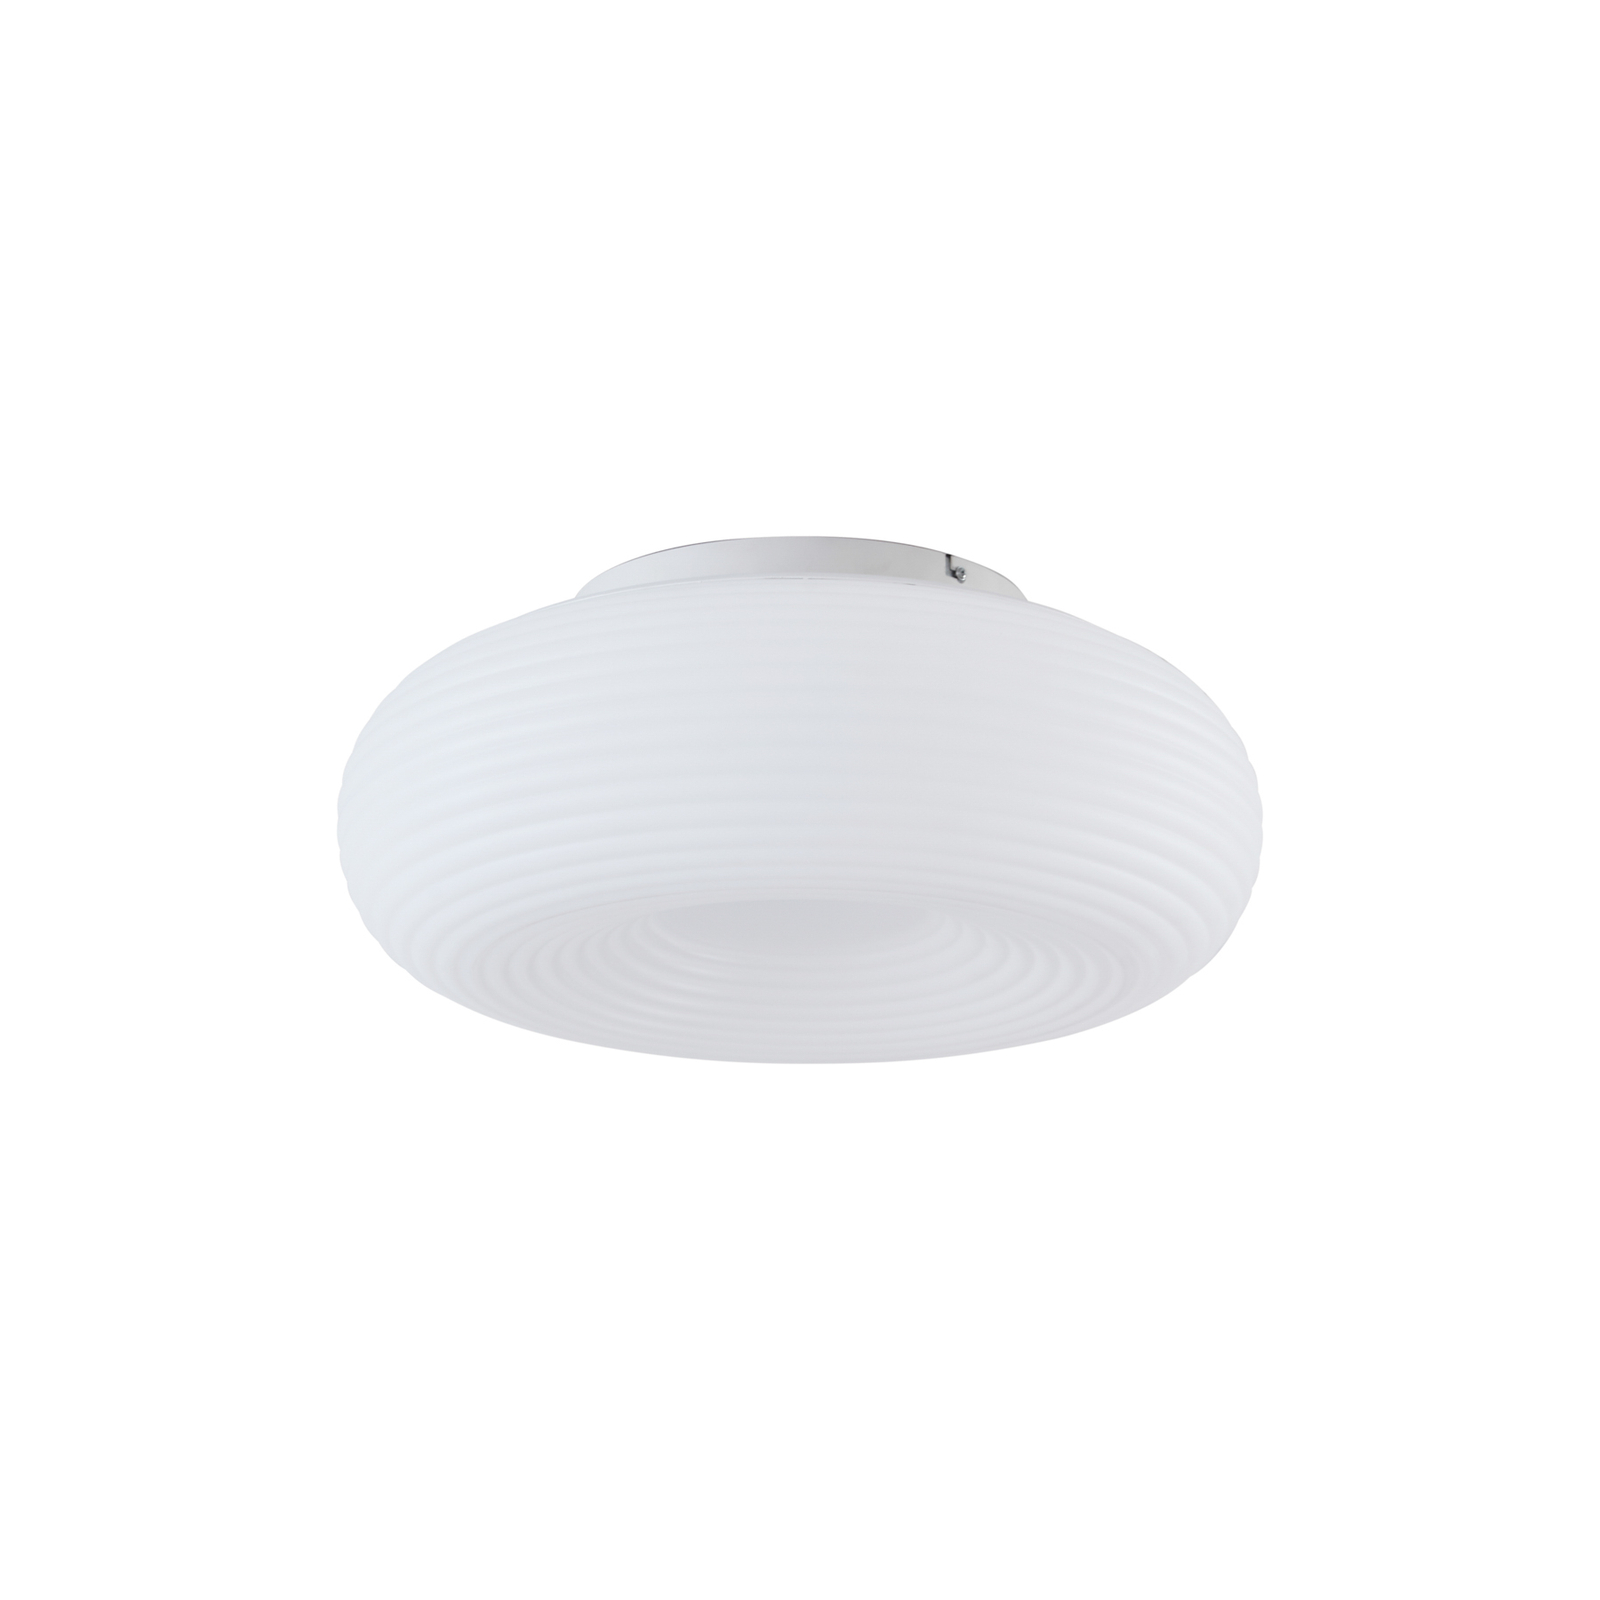 Lucande Smart LED ceiling light Bolti, white, RGBW, CCT, Tuya